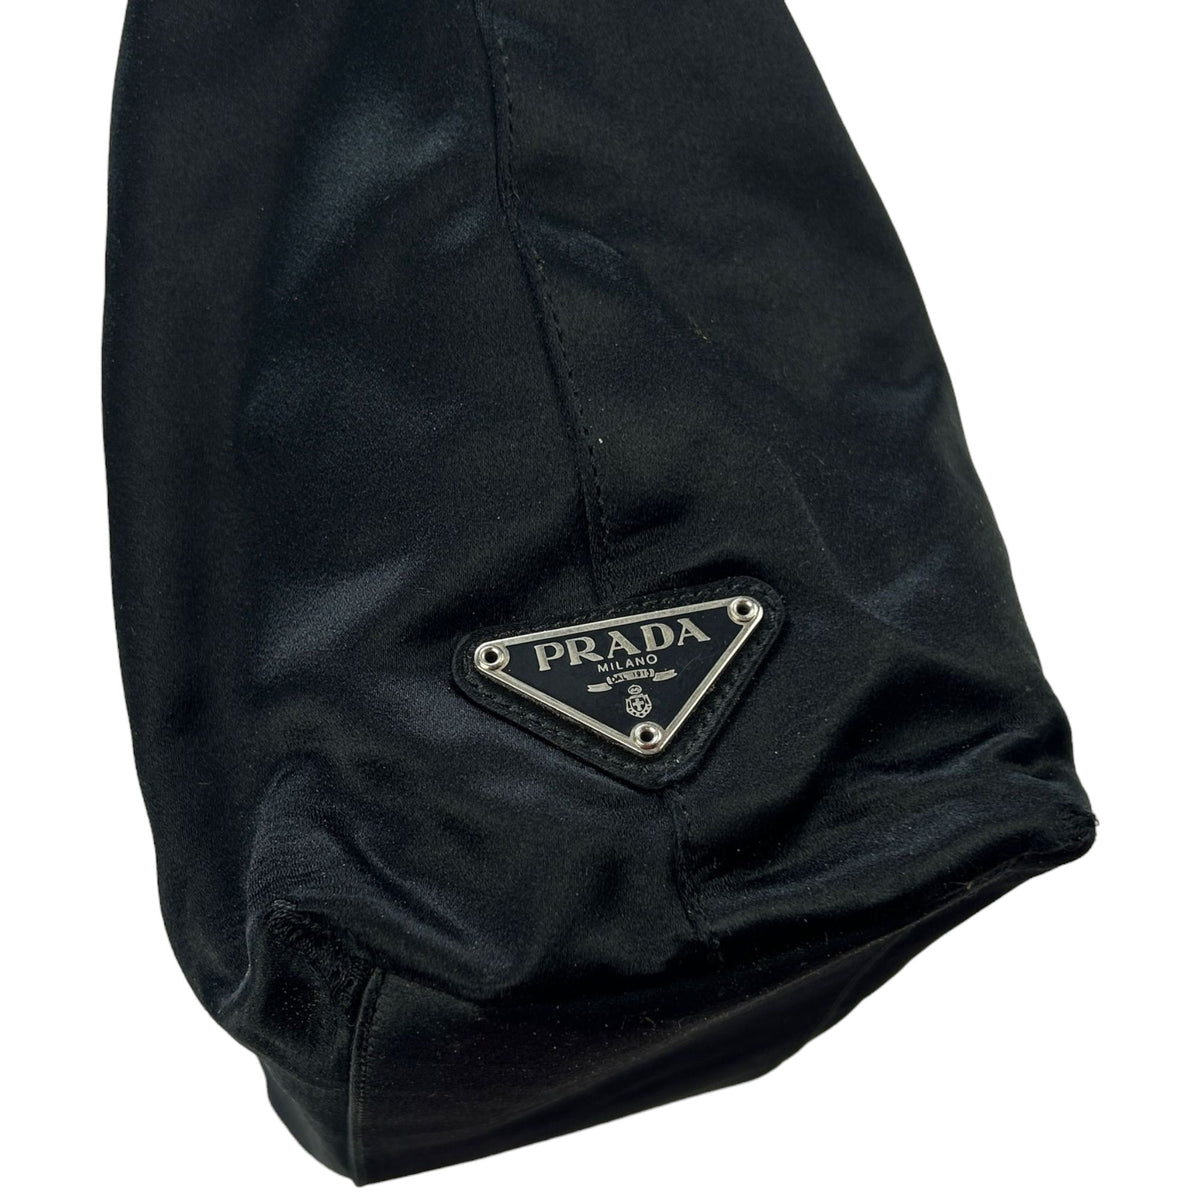 Vintage Prada Handbag With Transparent Handle